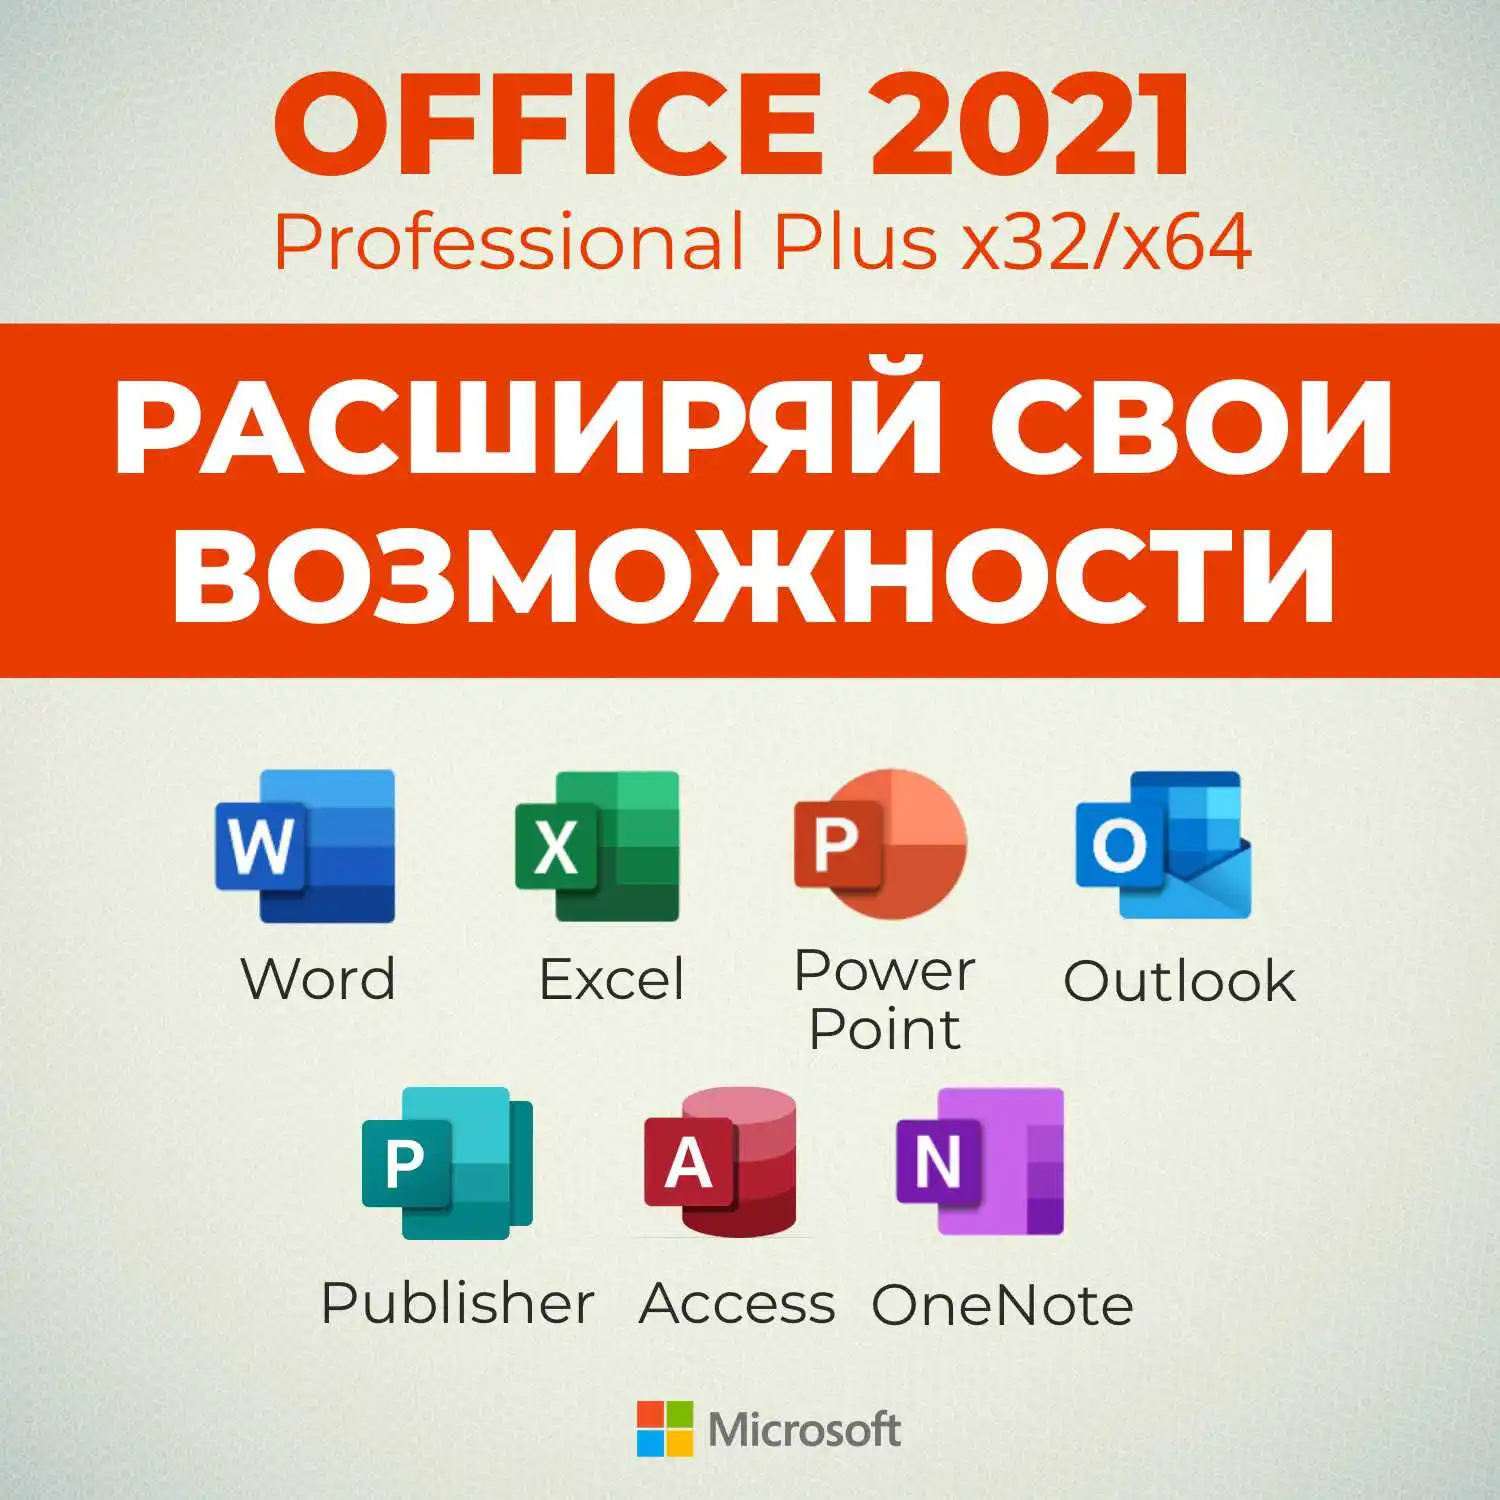 Активировать офис 2021 ключ. Ключ активации Office 2021. Microsoft Office 2021 ключ. Ключ для MS Office Pro 2021. Ключ активации офис 2021 профессионал плюс.